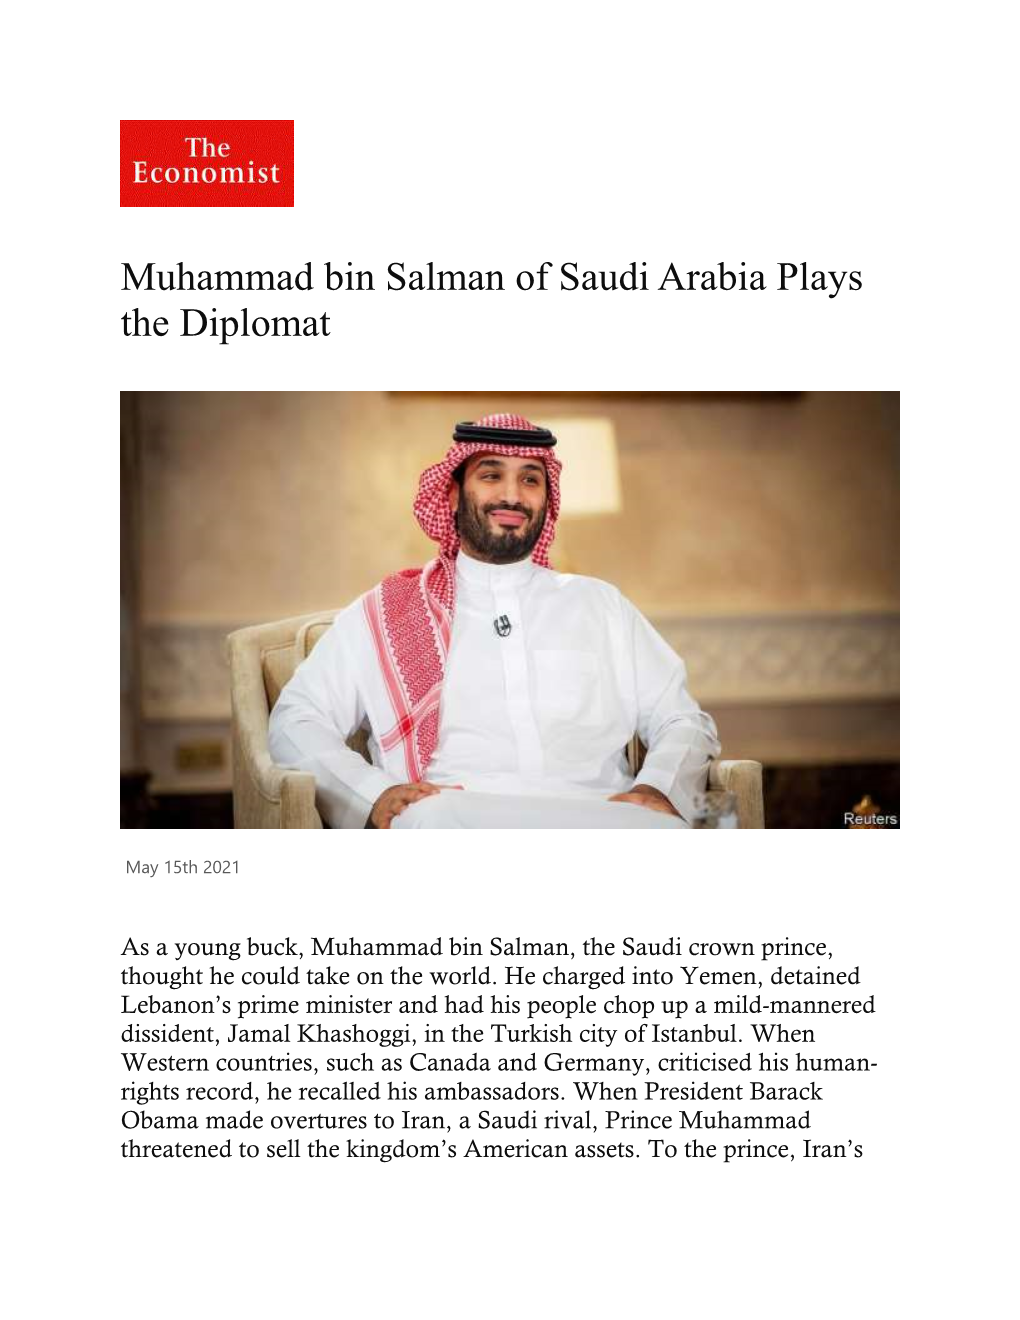 Muhammad Bin Salman of Saudi Arabia Plays the Diplomat